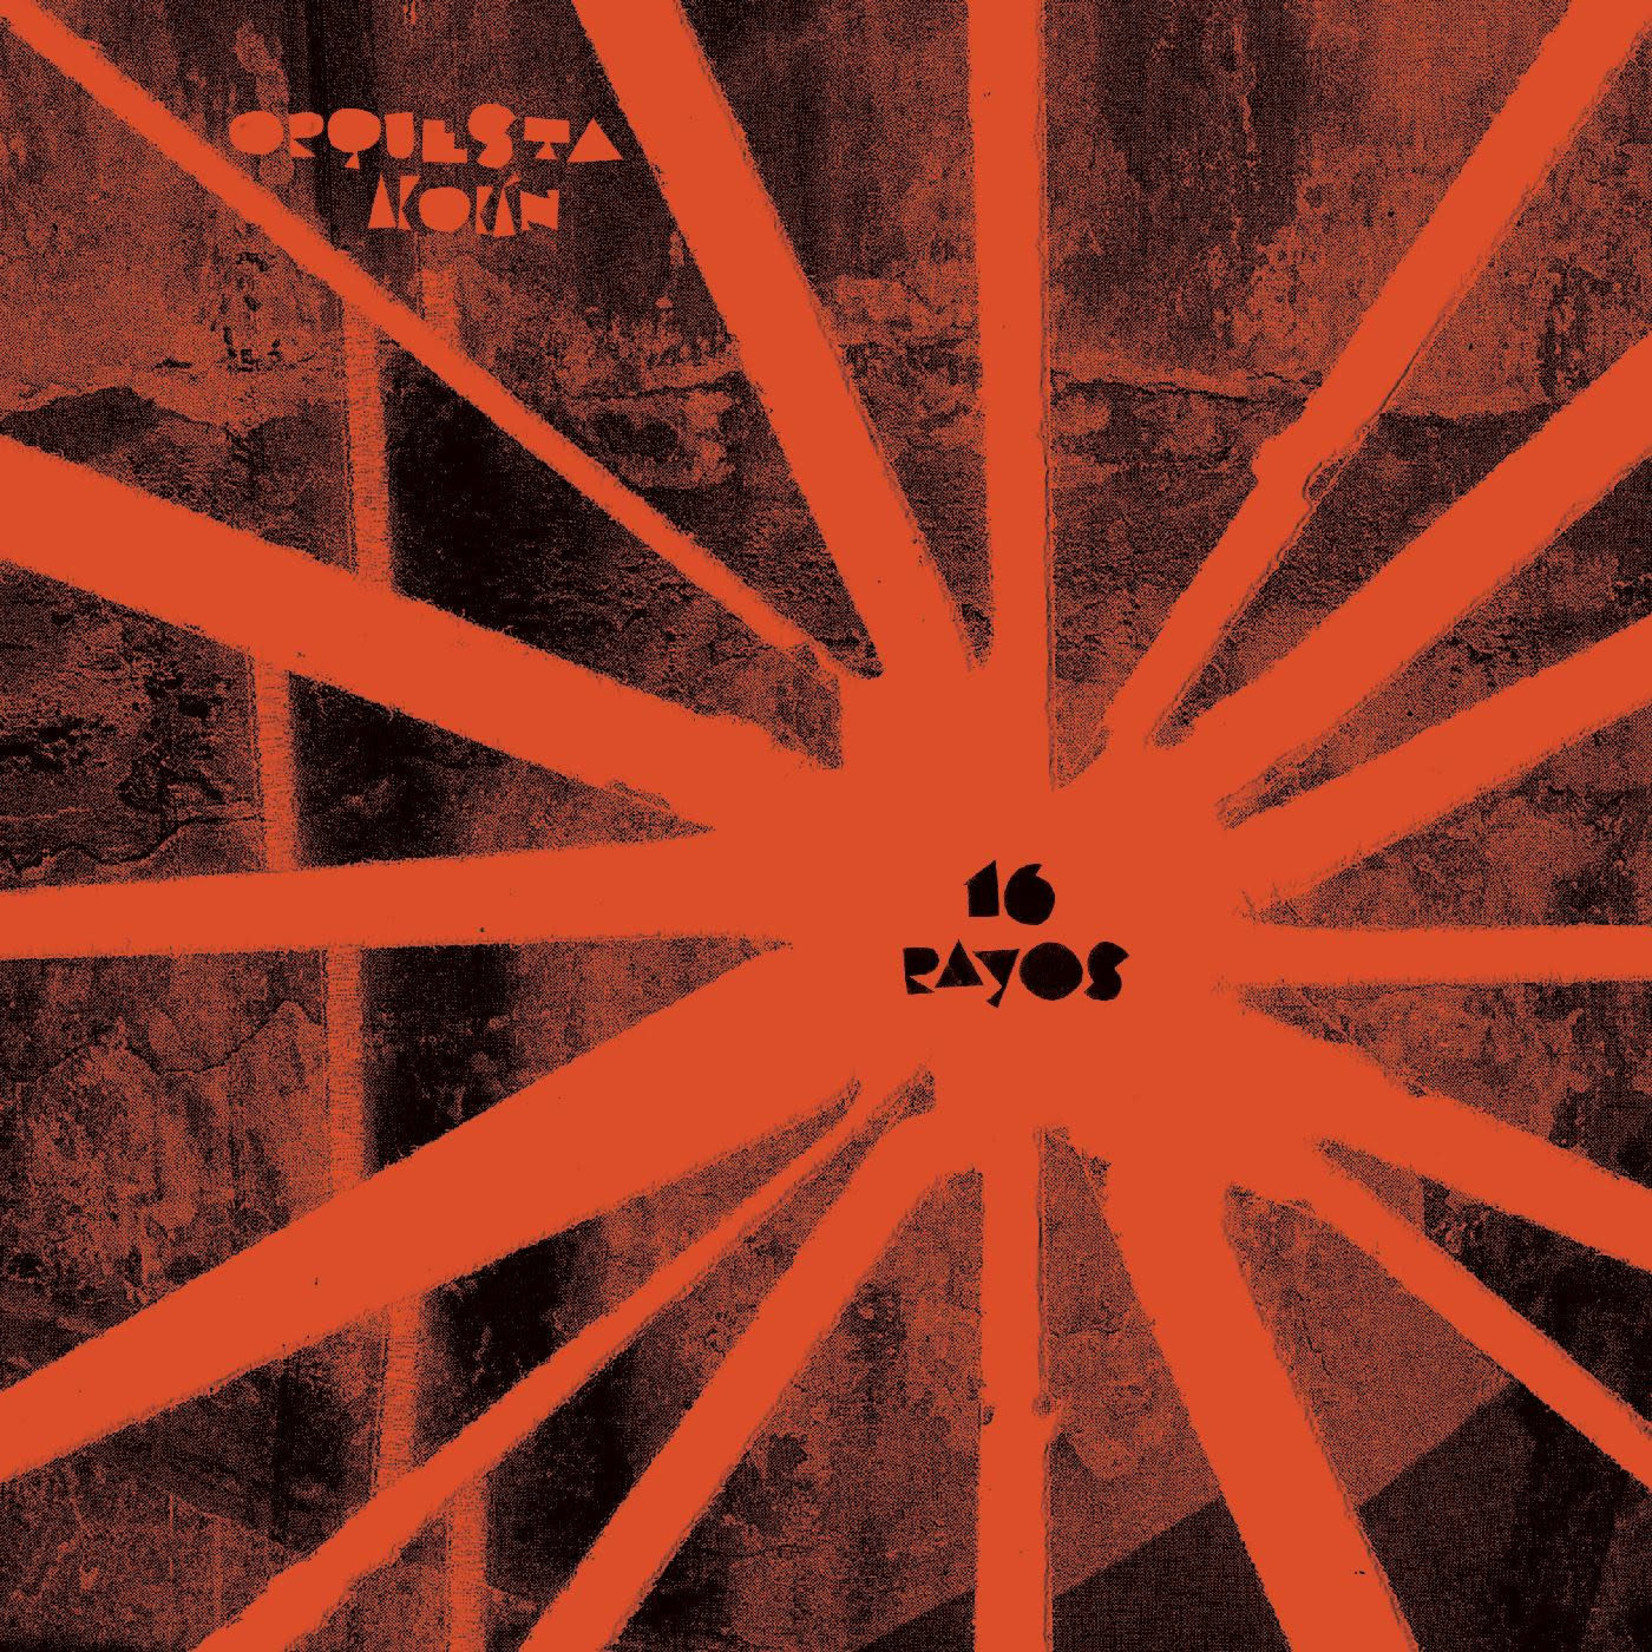 Daptone Orquesta Akokan - 16 Rayos (LP) [Canary Crimson]